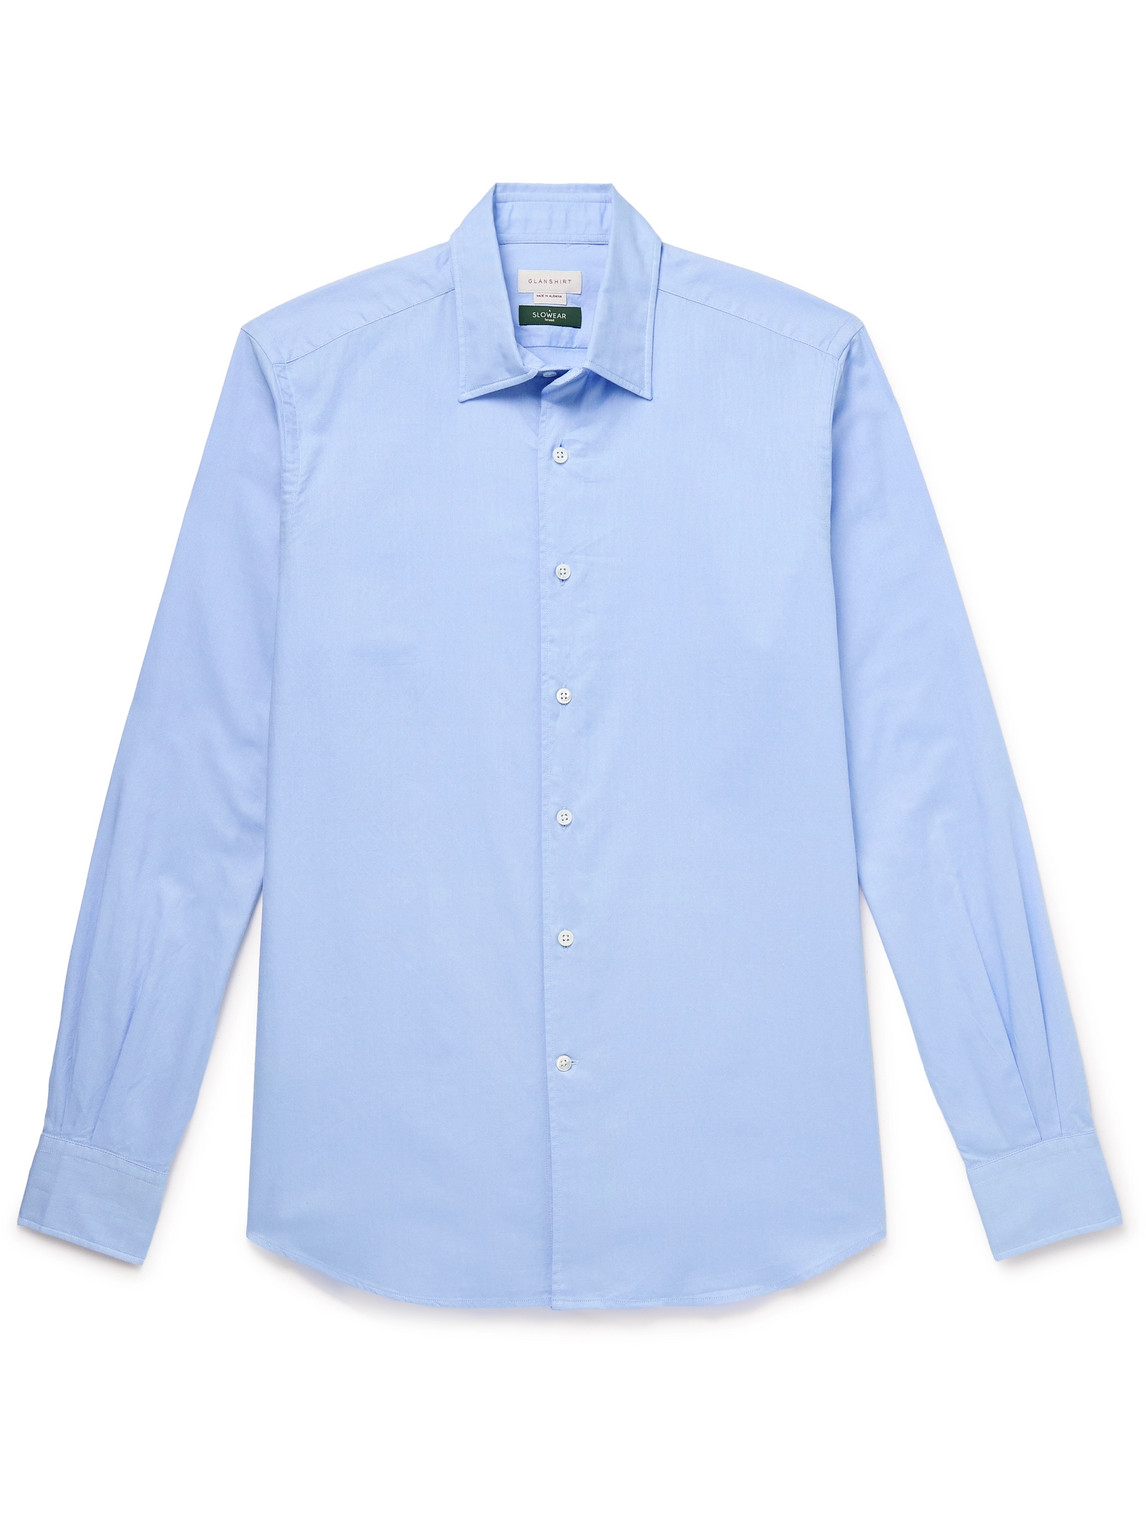 Incotex Cotton Oxford Shirt In Blue